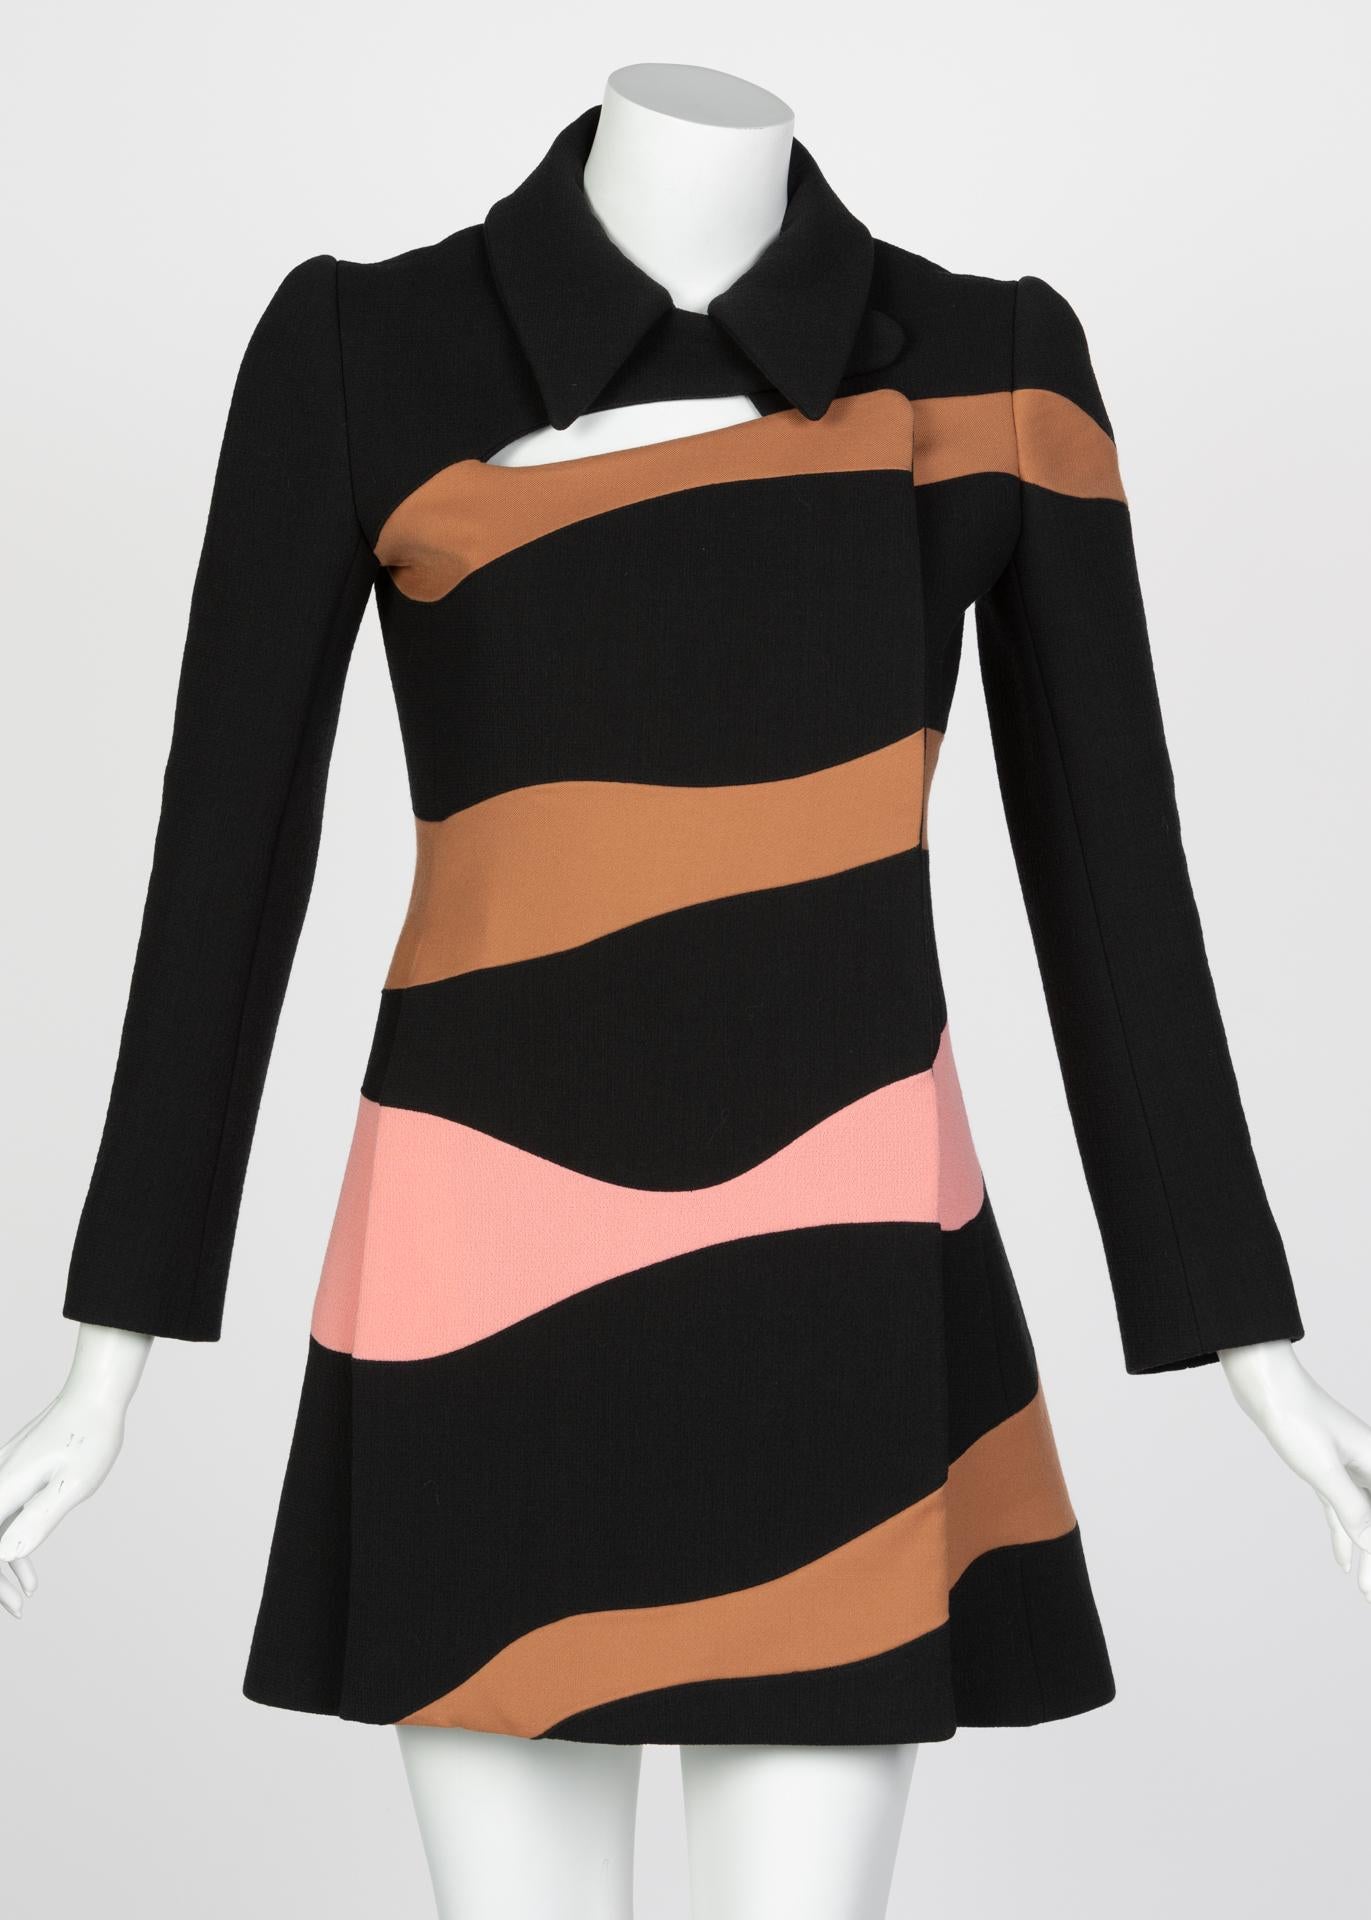 Christian Dior Abstract Stripe Coat Dress Runway Fall, 2015 4